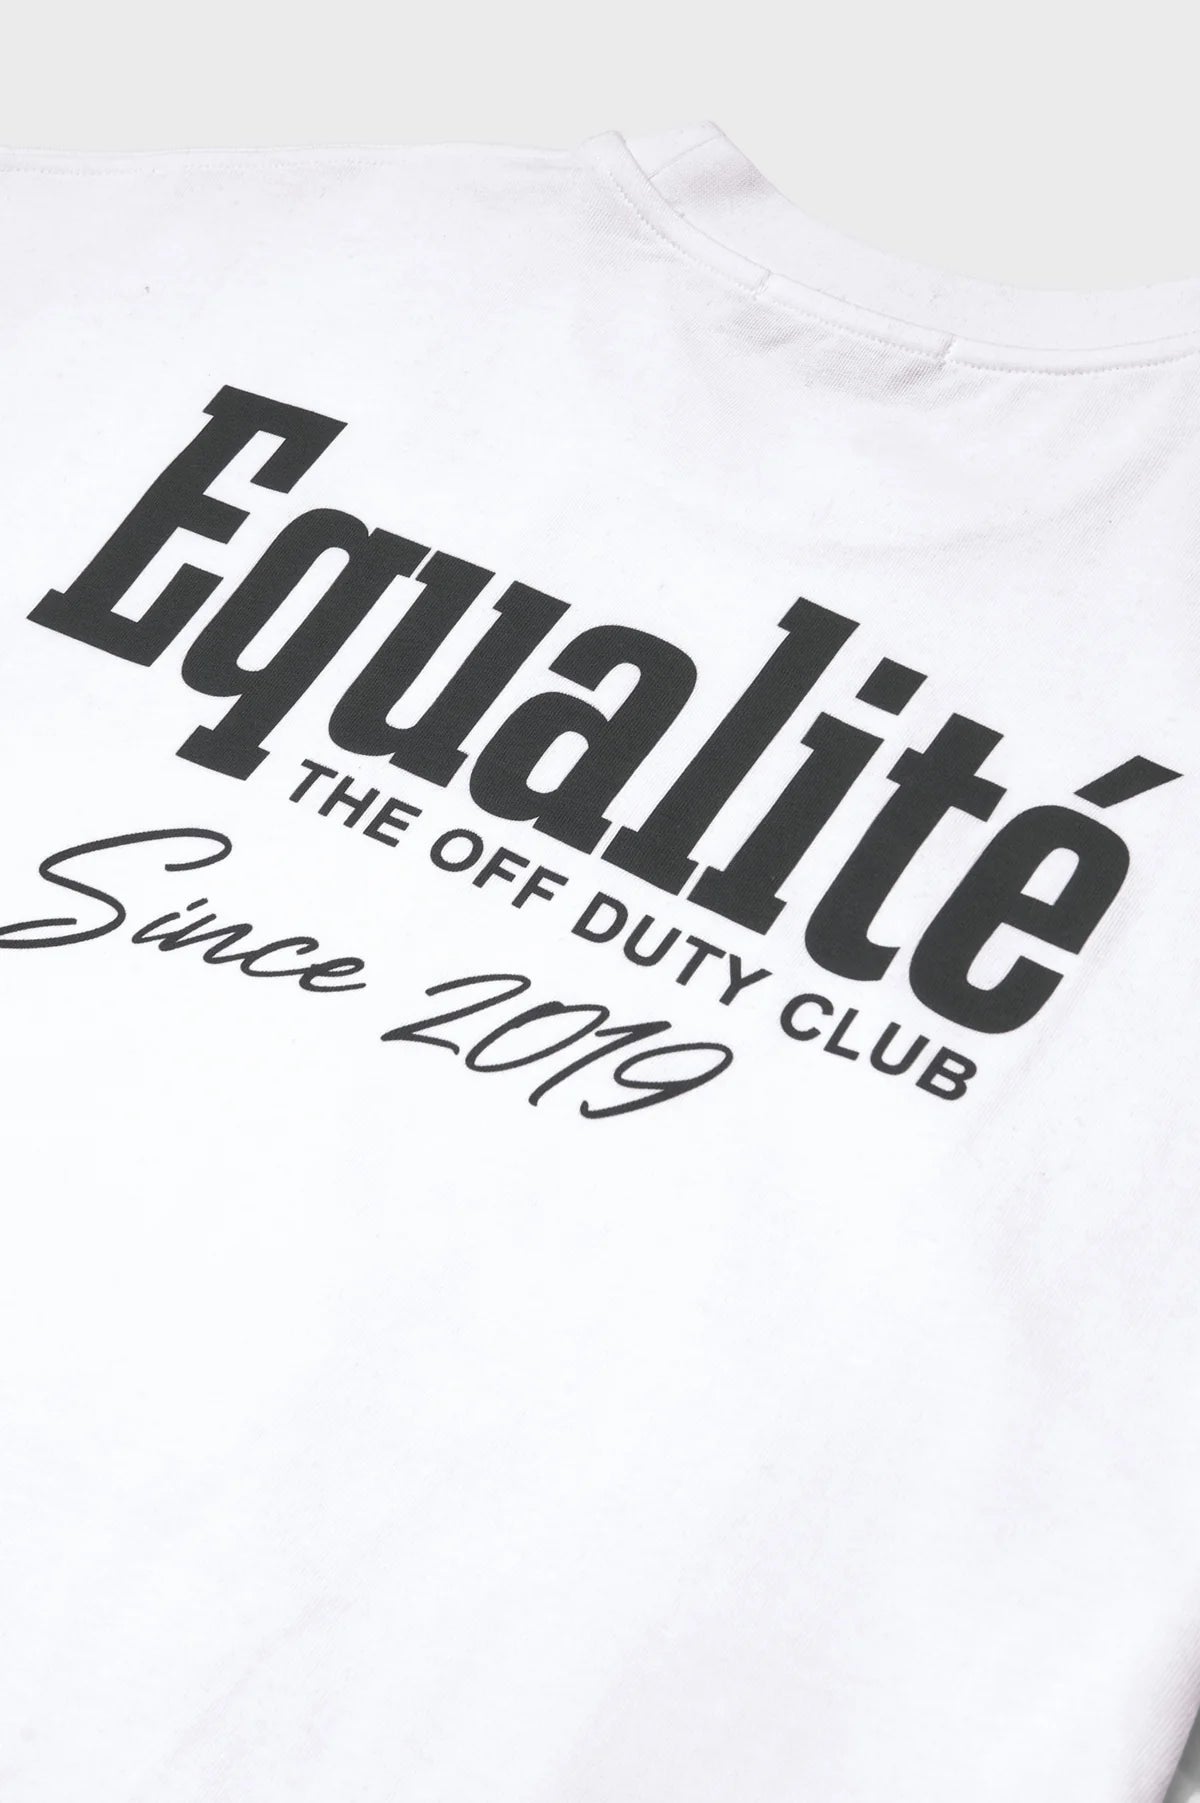 Equalité | Racing Club Oversized T-shirt Wit Unisex